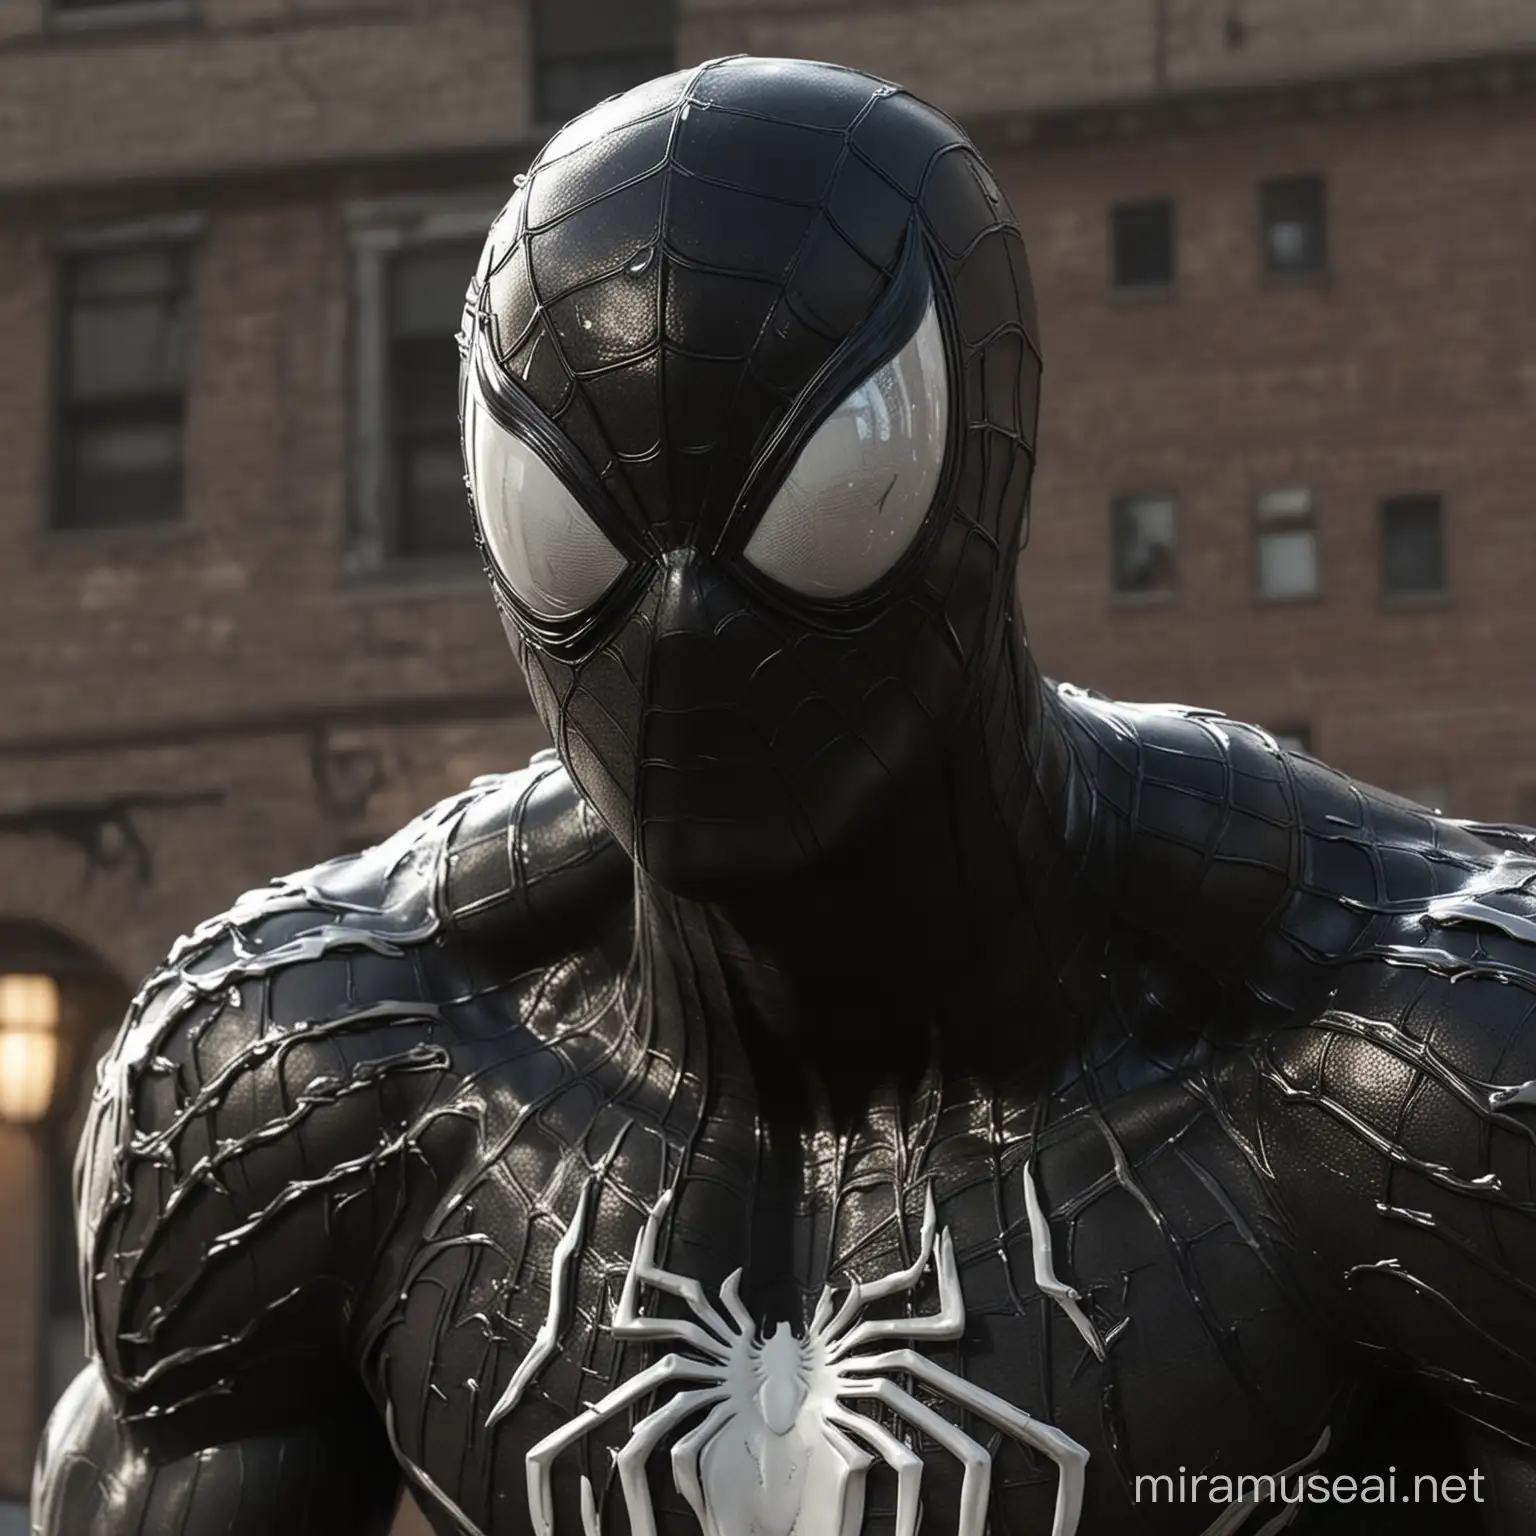 SpiderMan Transforming with Venom Symbiote Suit